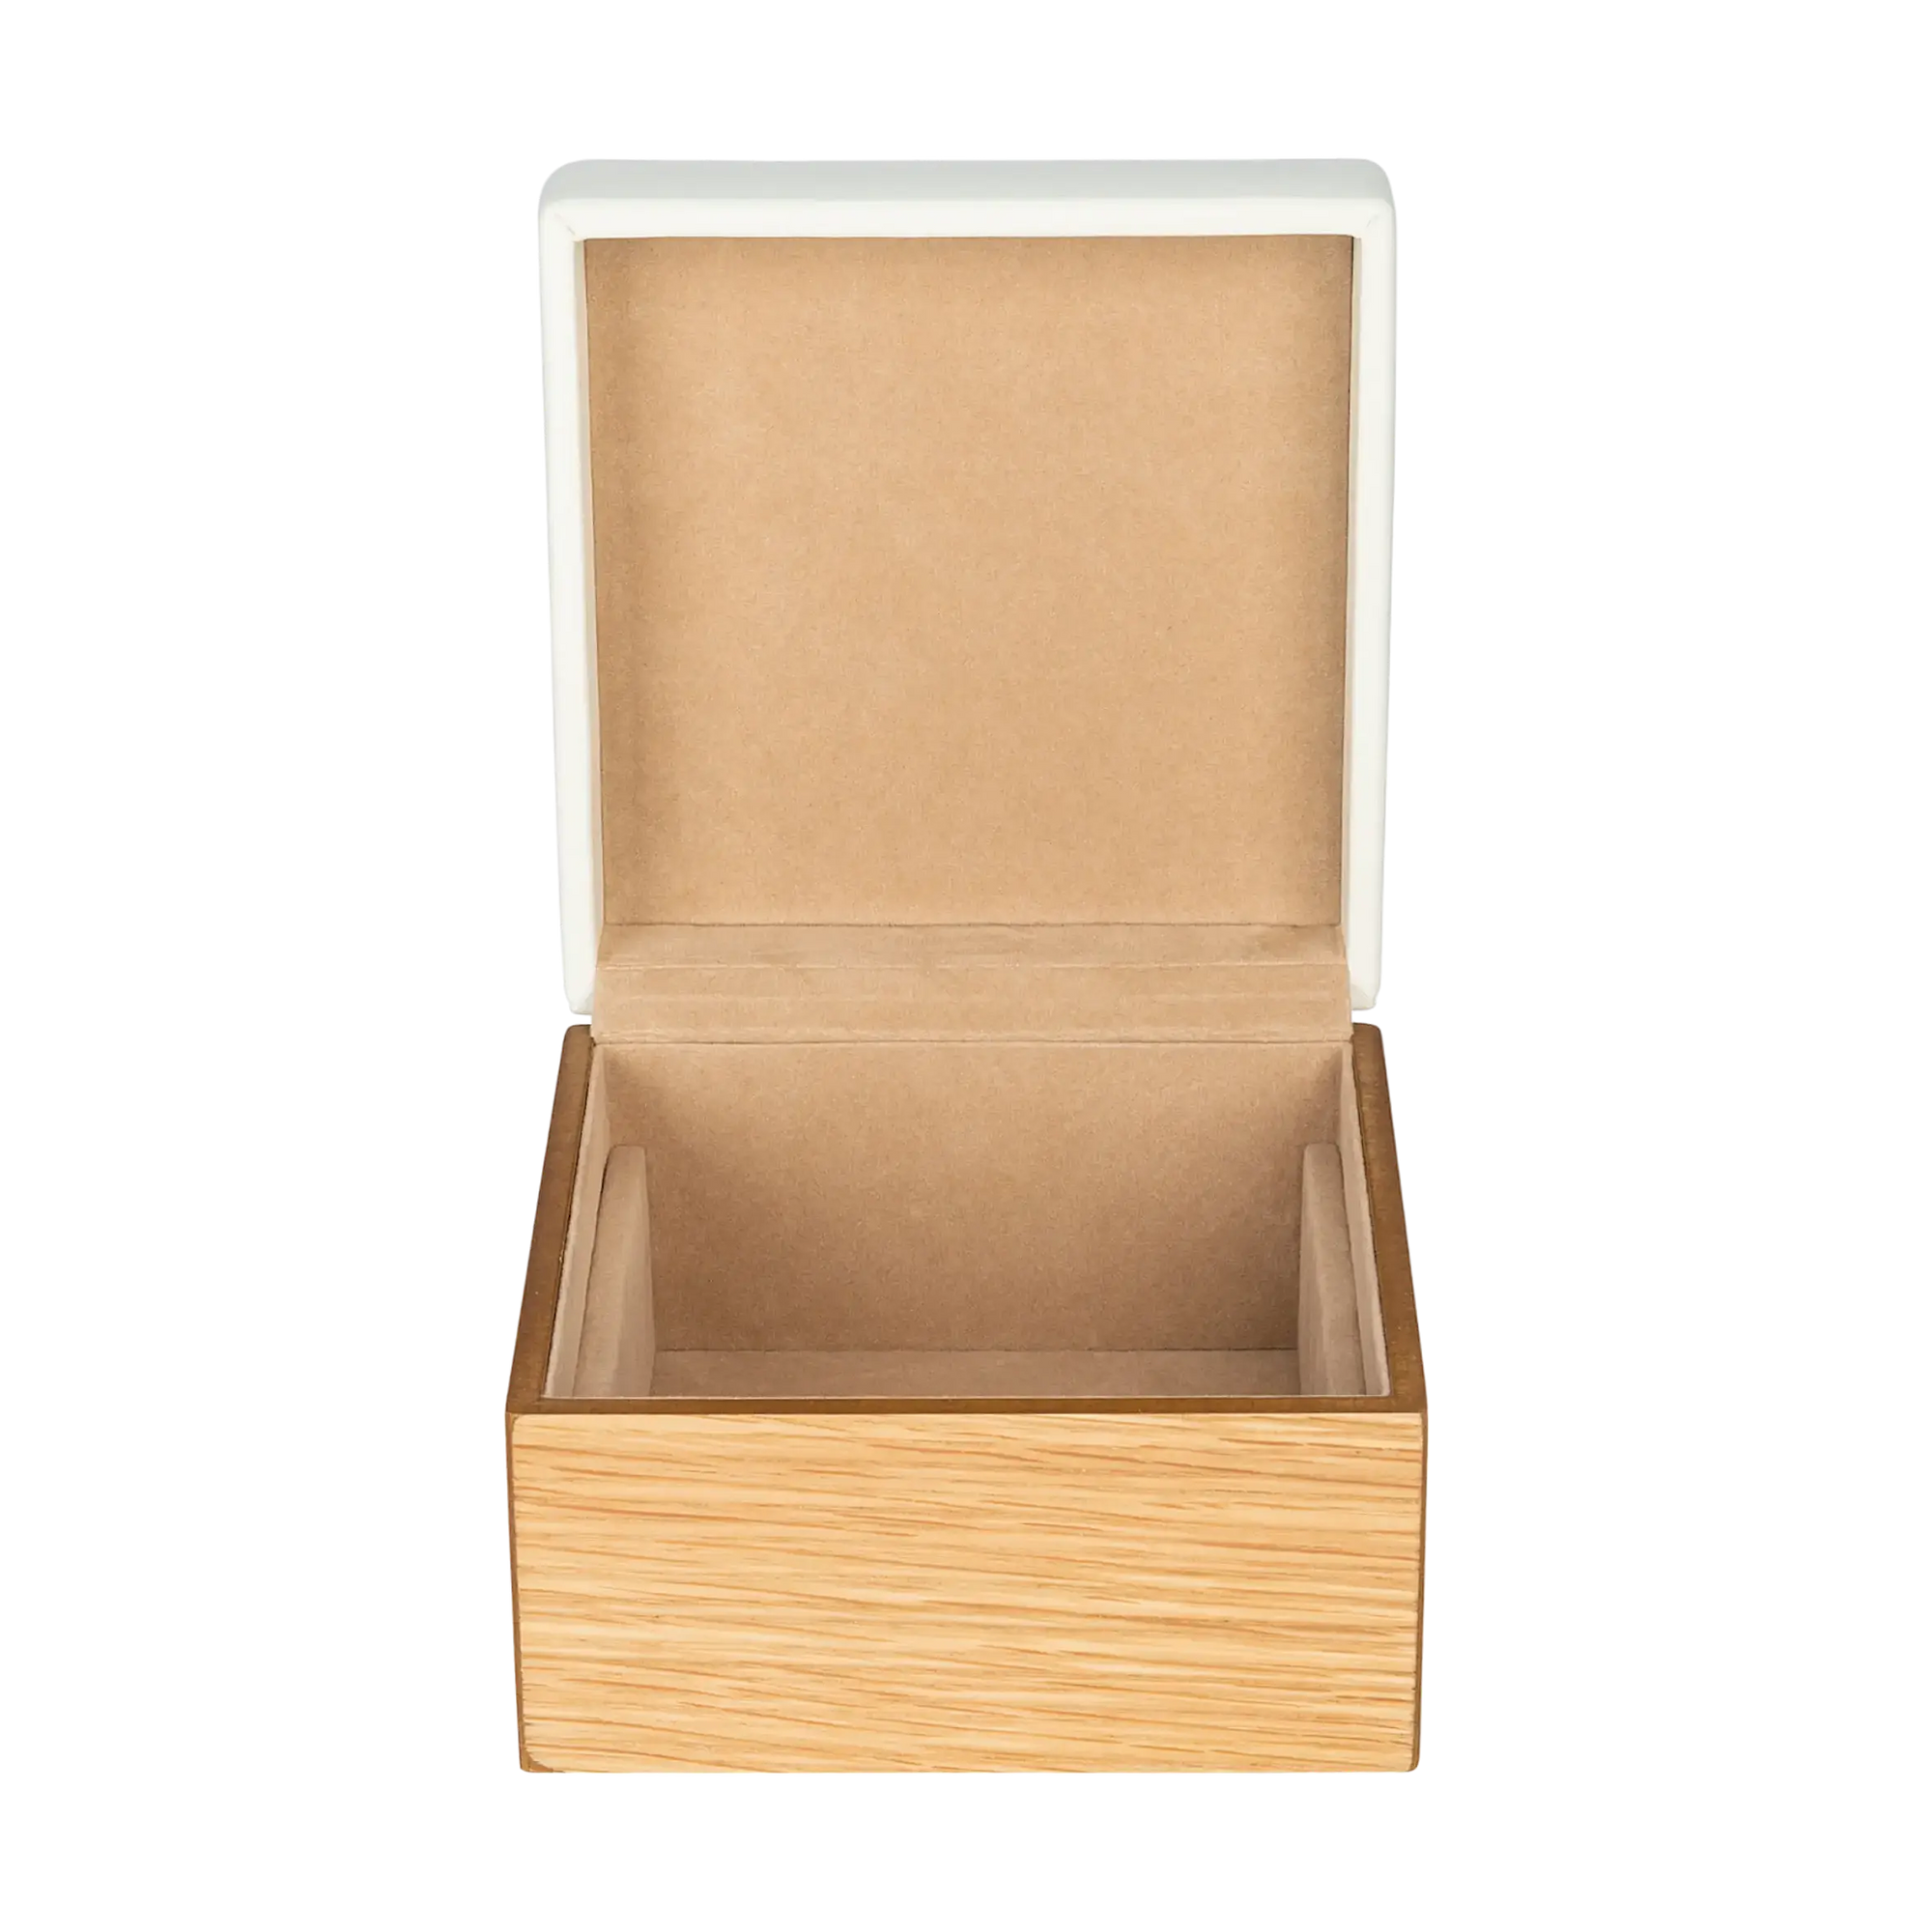 Jewelry box wood / cream